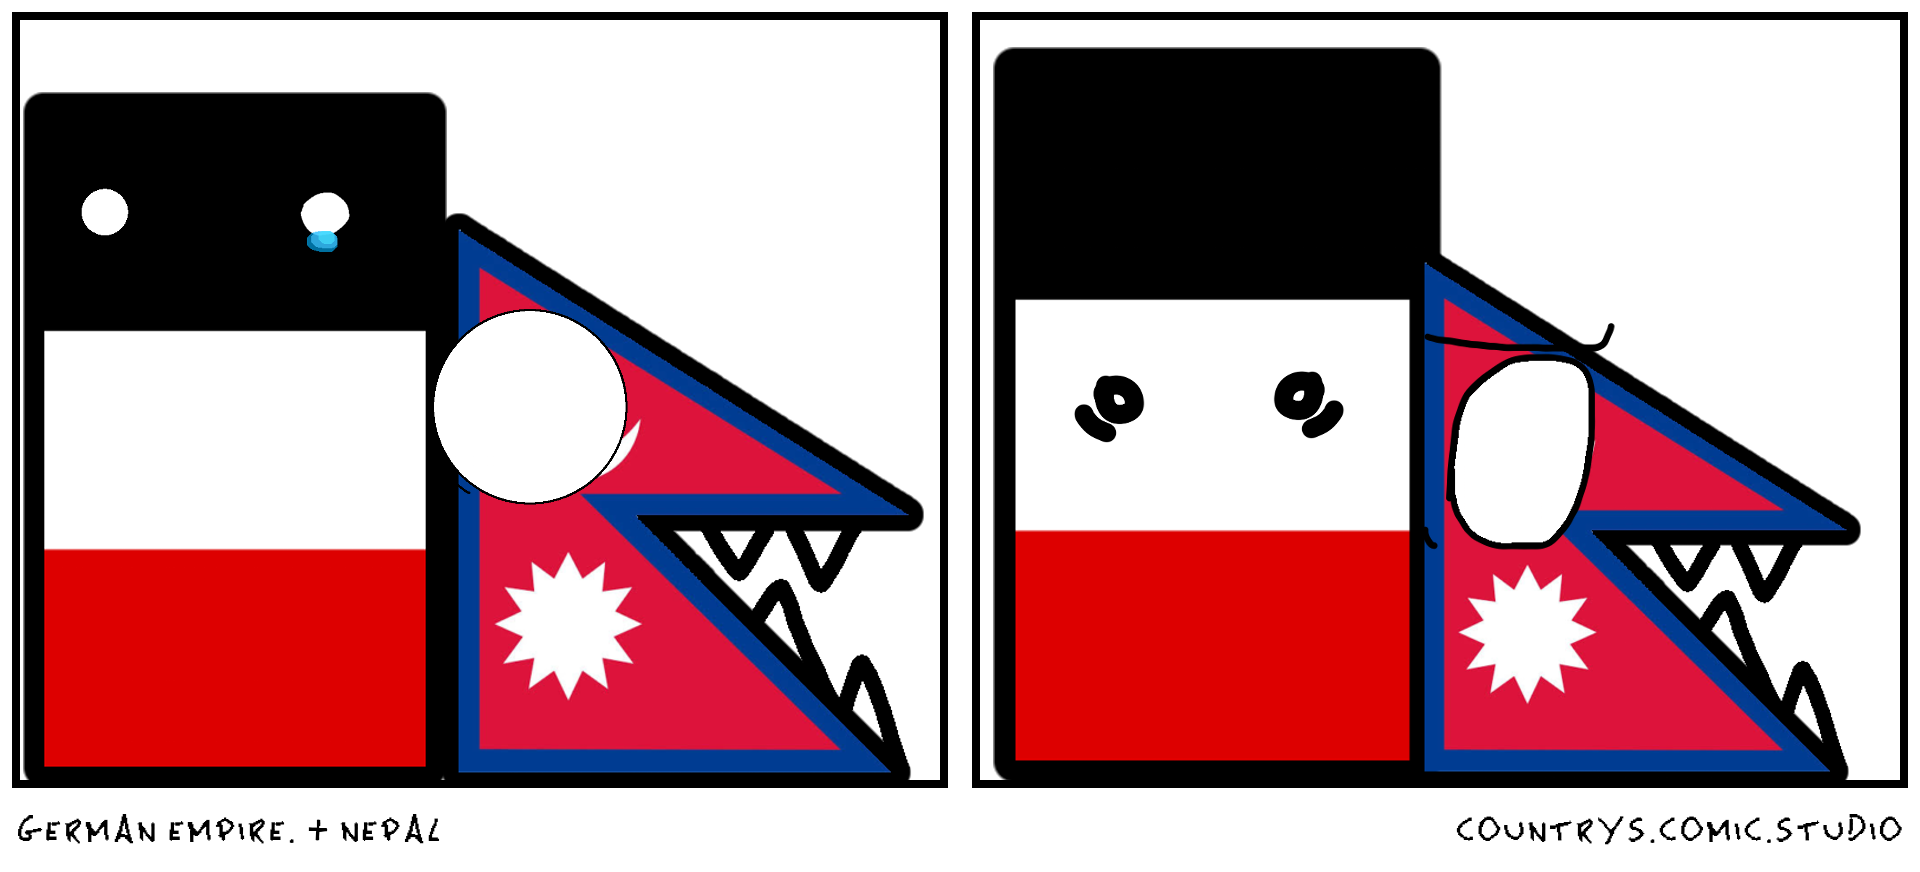 German empire. + nepal